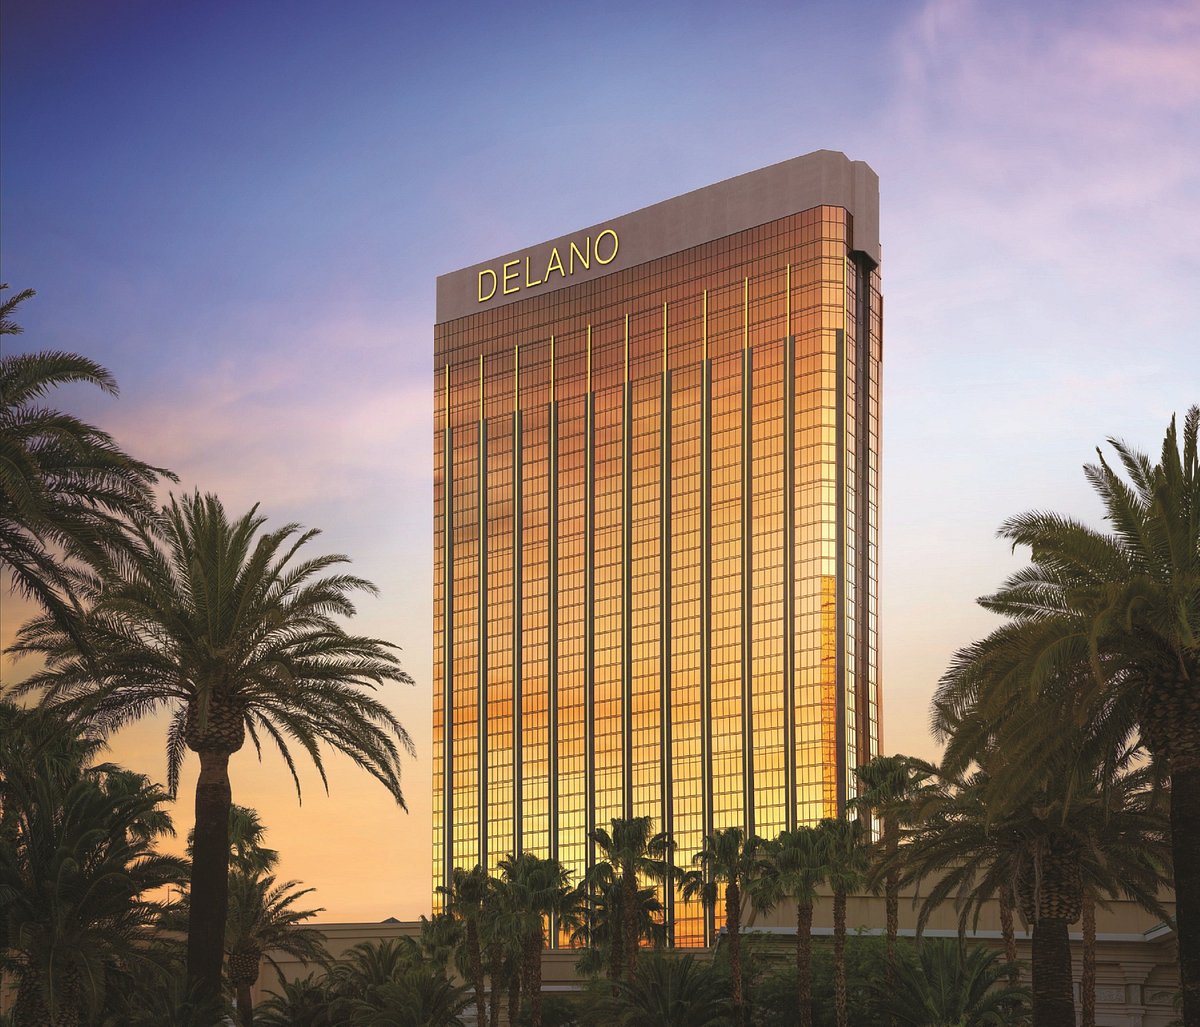 16 Best Hotels in Las Vegas. Hotels from C$ 48/night - KAYAK